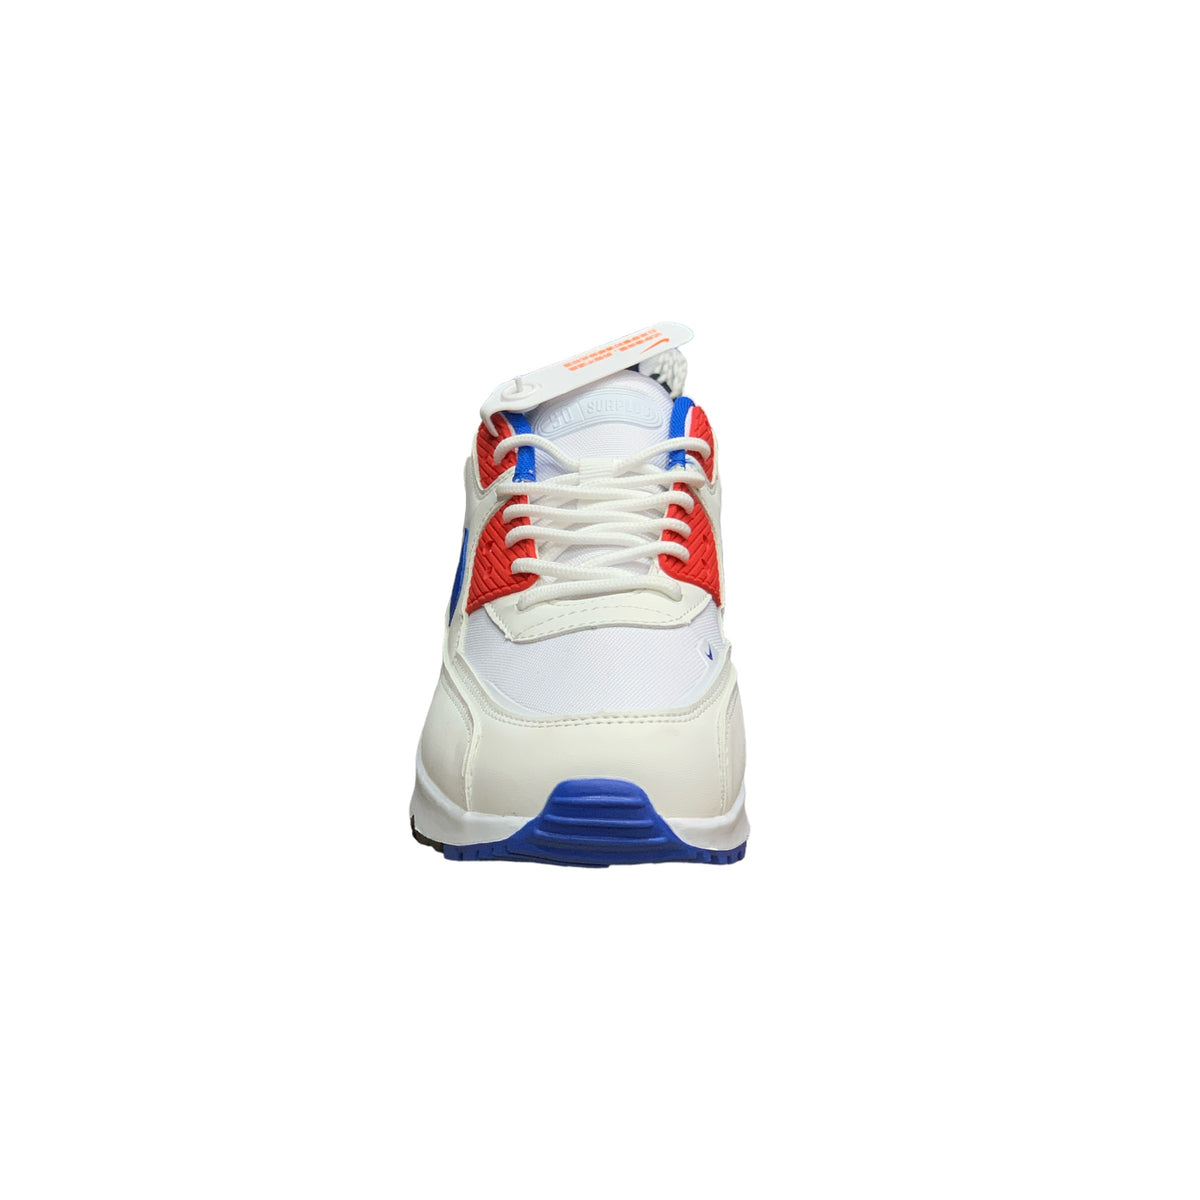 Nike Airmax 90 Premium White Blue Red